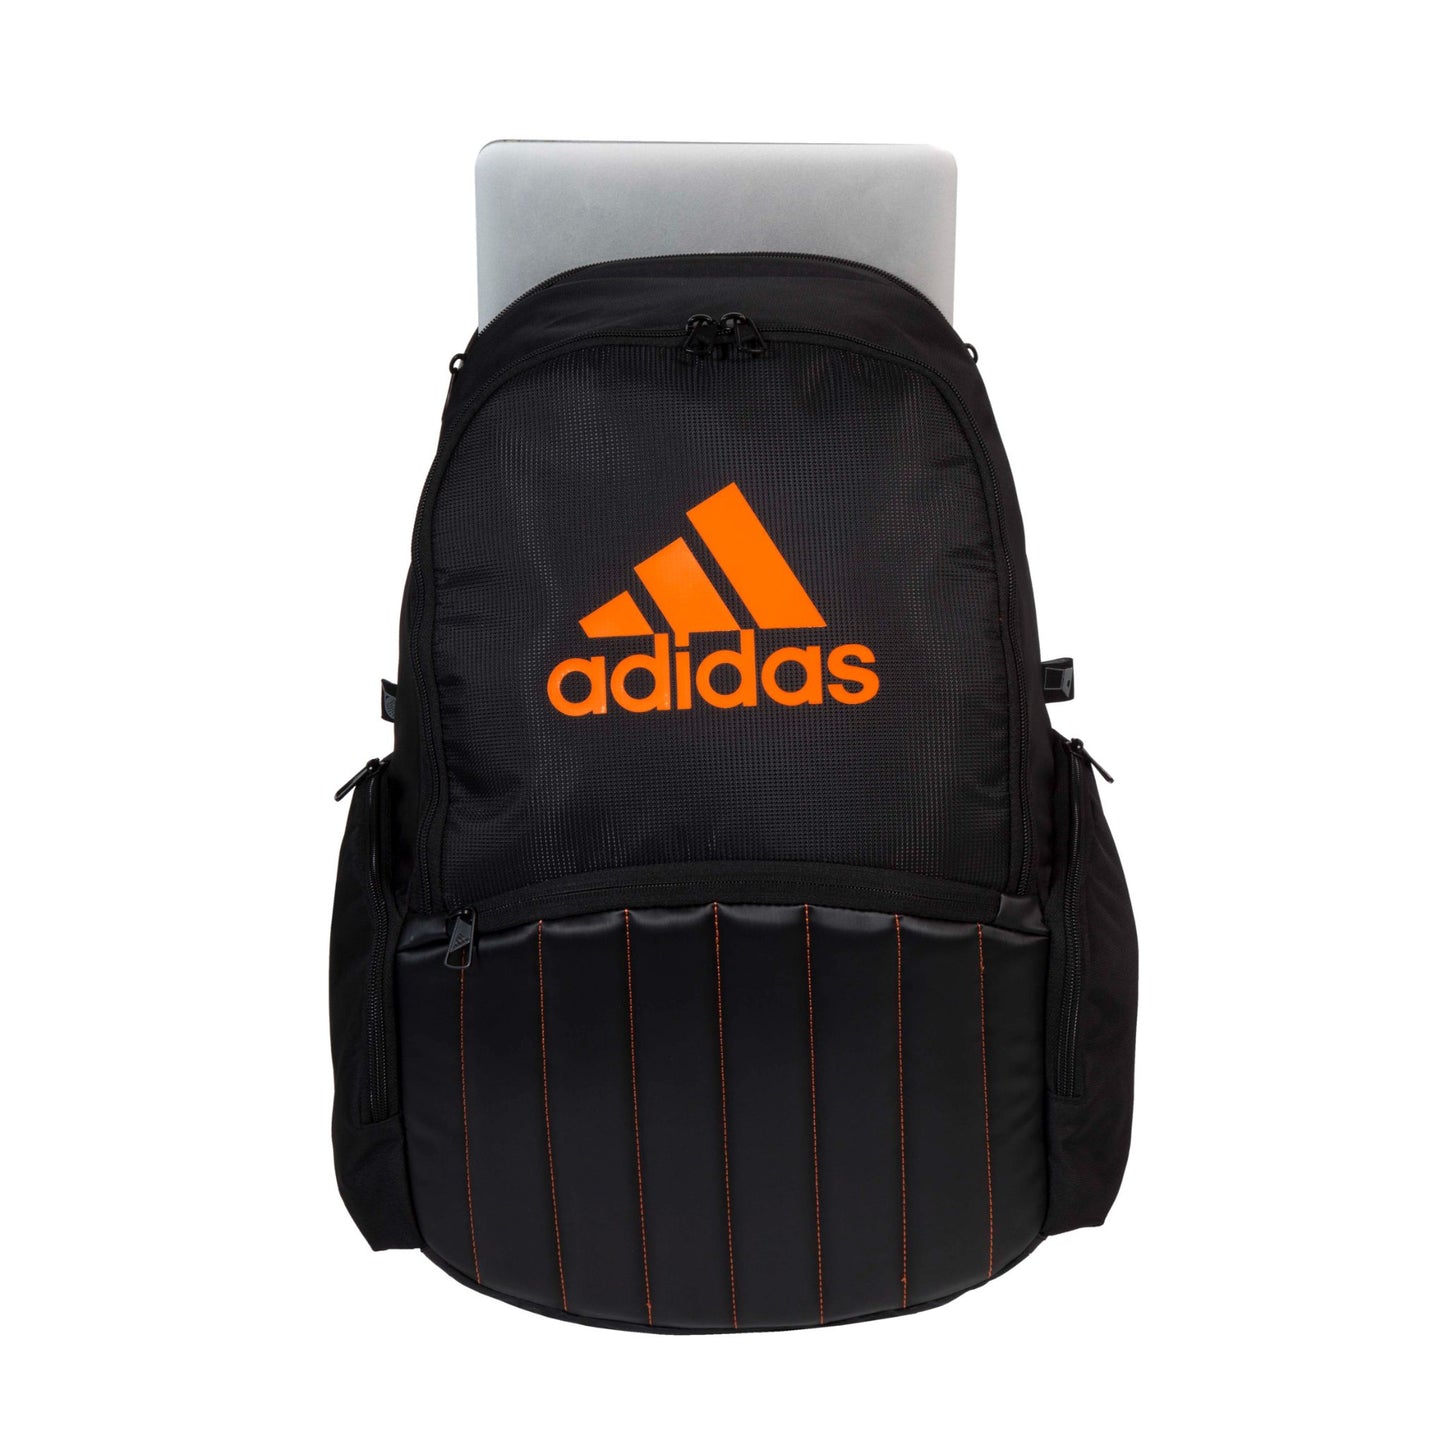 Adidas Protour Backpack - Orange-Front